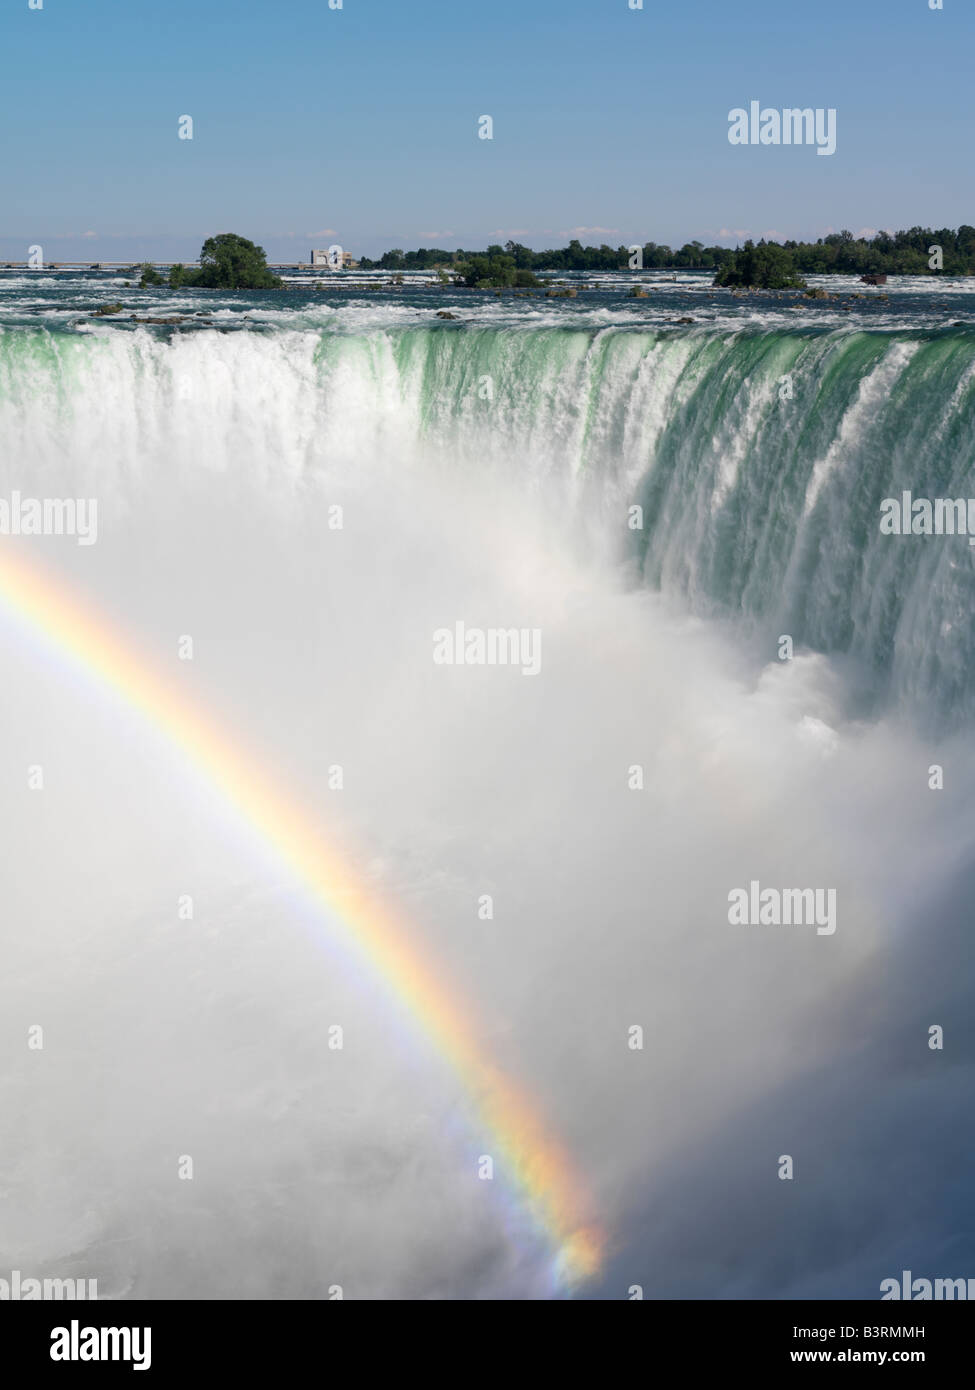 Canada, Ontario, Niagara Falls,Chute canadienne avec un arc-en-ciel Banque D'Images